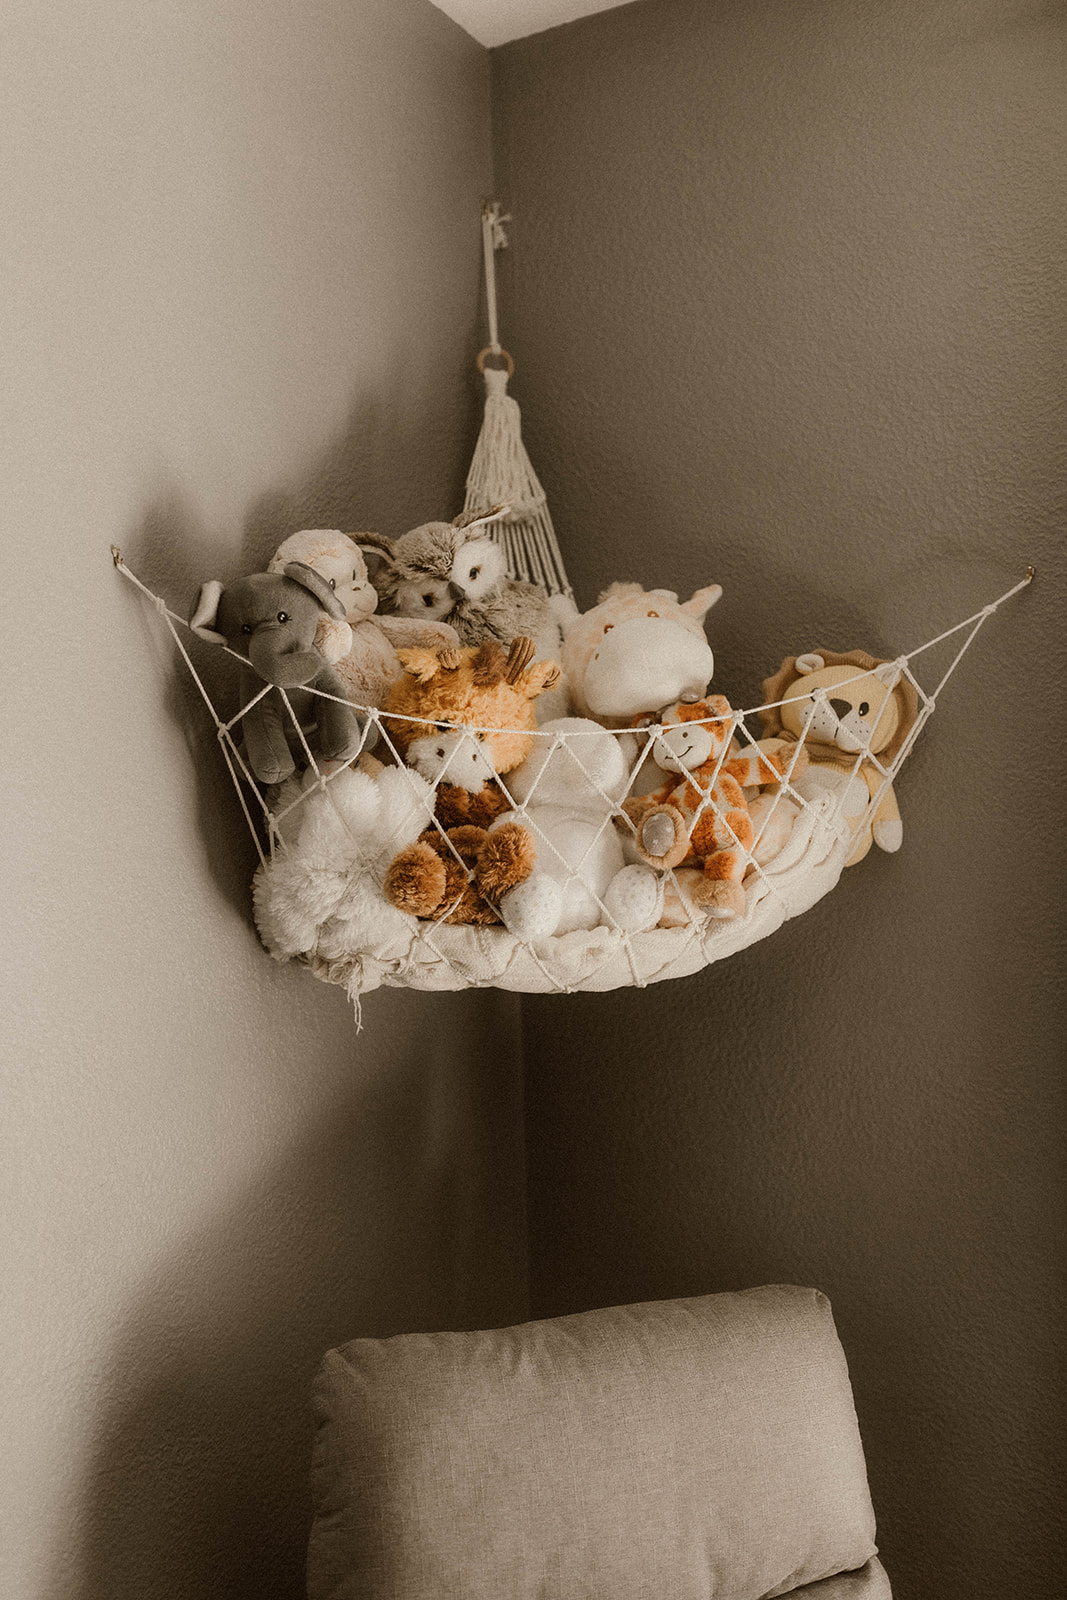 Detail photo of the newborns stuffed animal hammock above his crib 